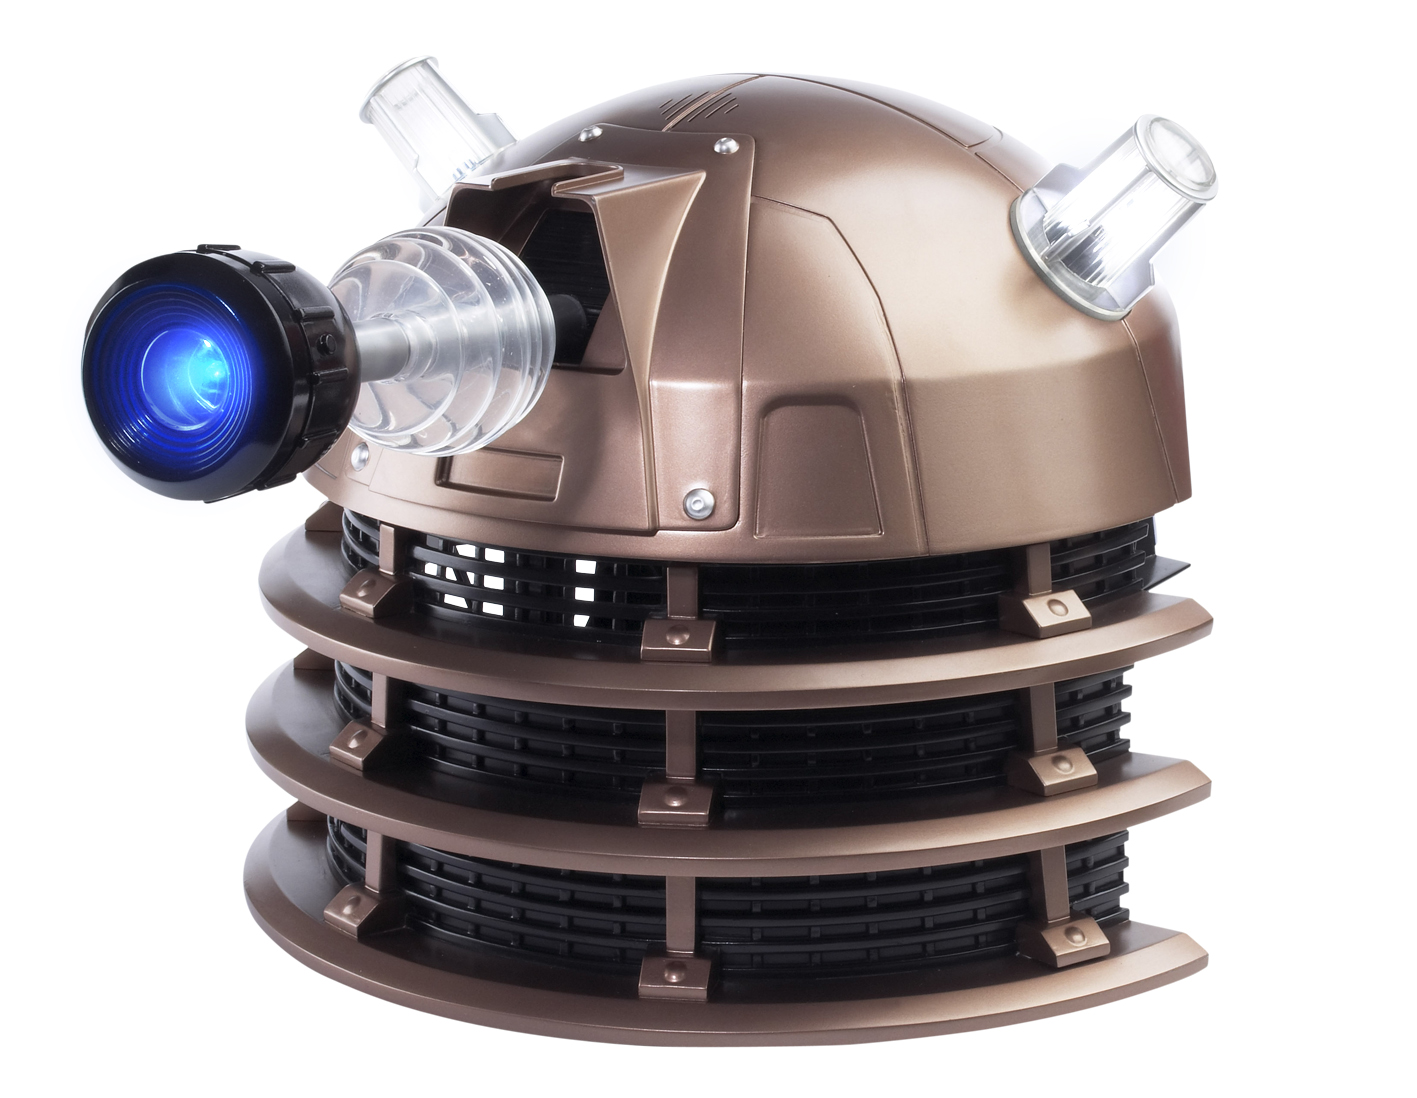 Dalek Electronic Voice Changer Mask